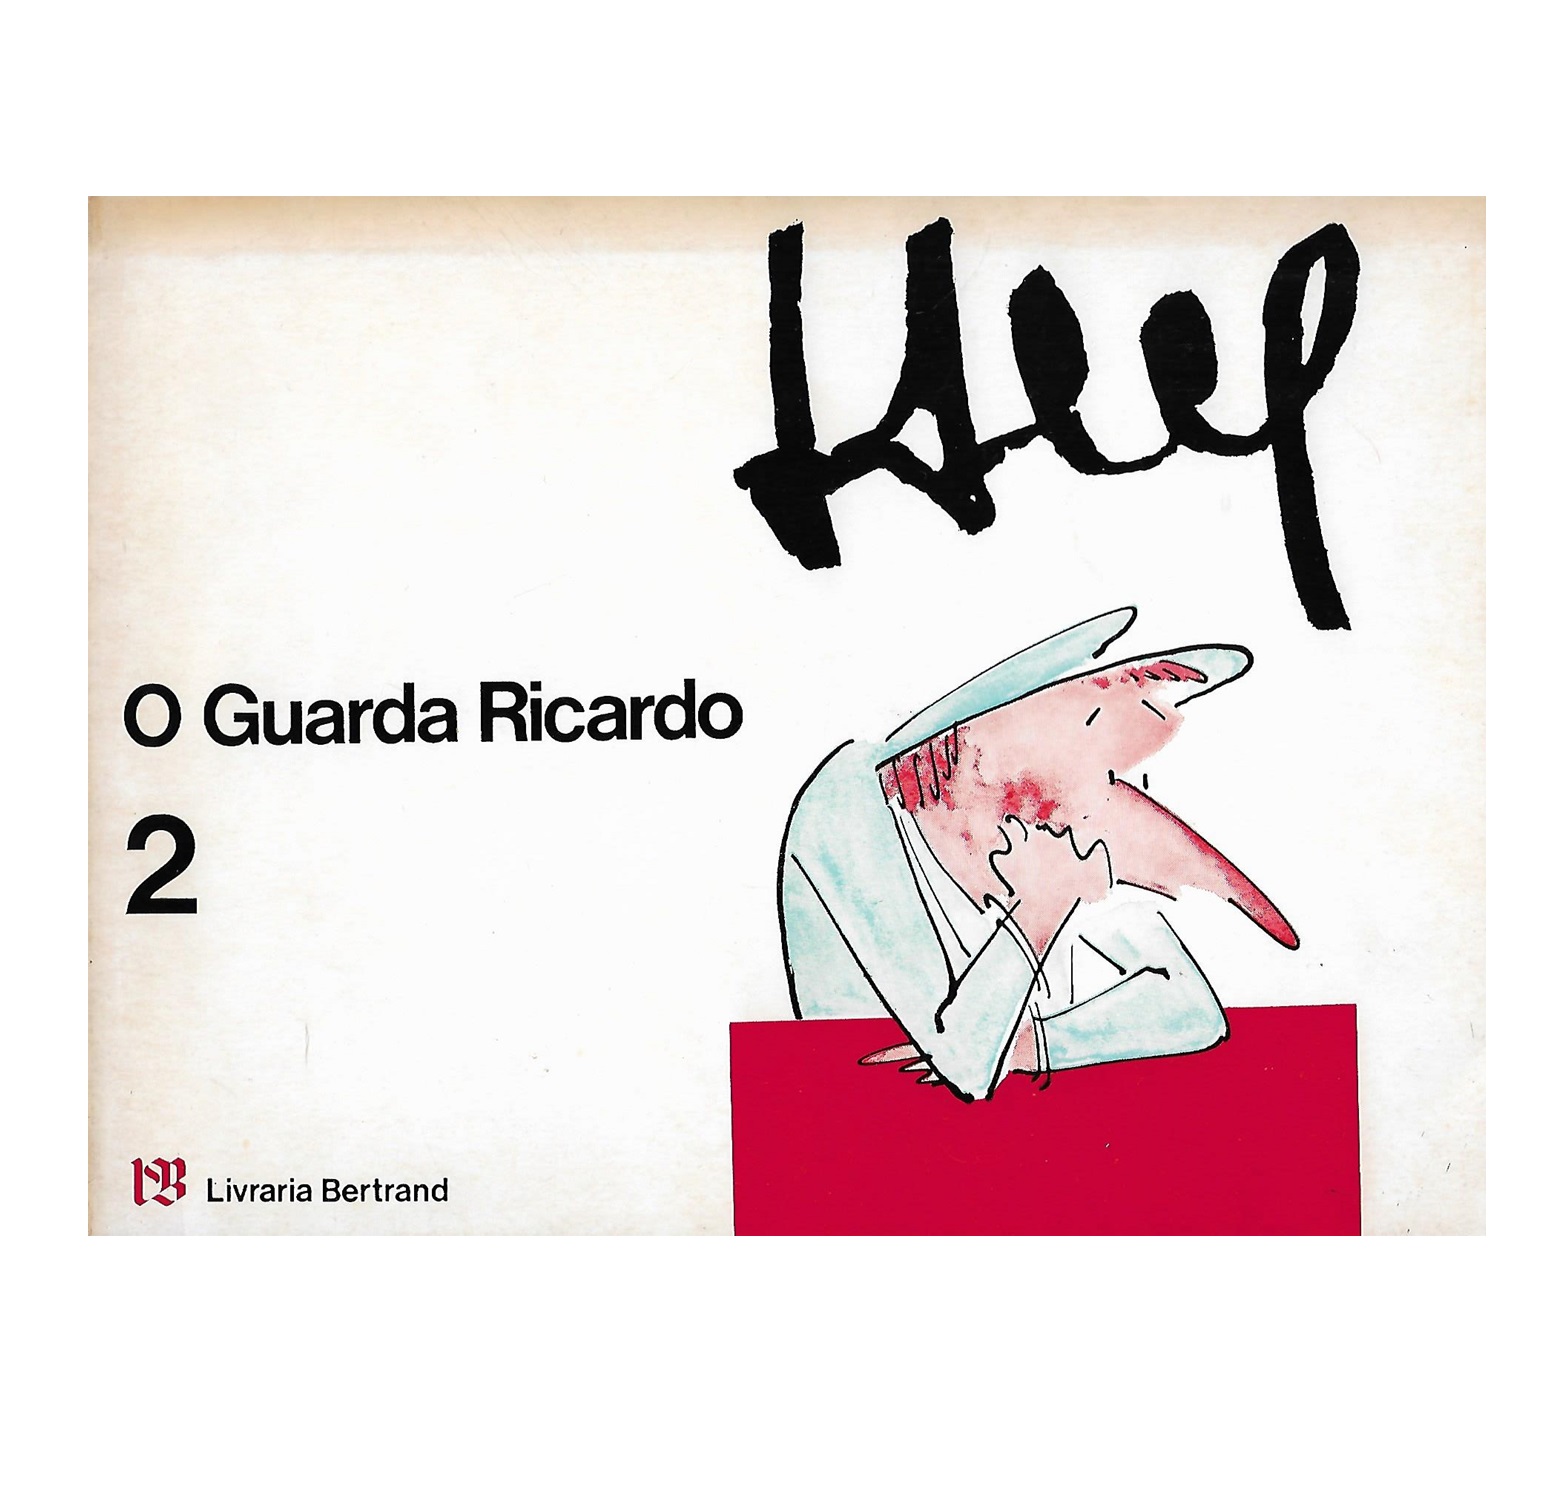 O GUARDA RICARDO/1 & /2 [cartoon]